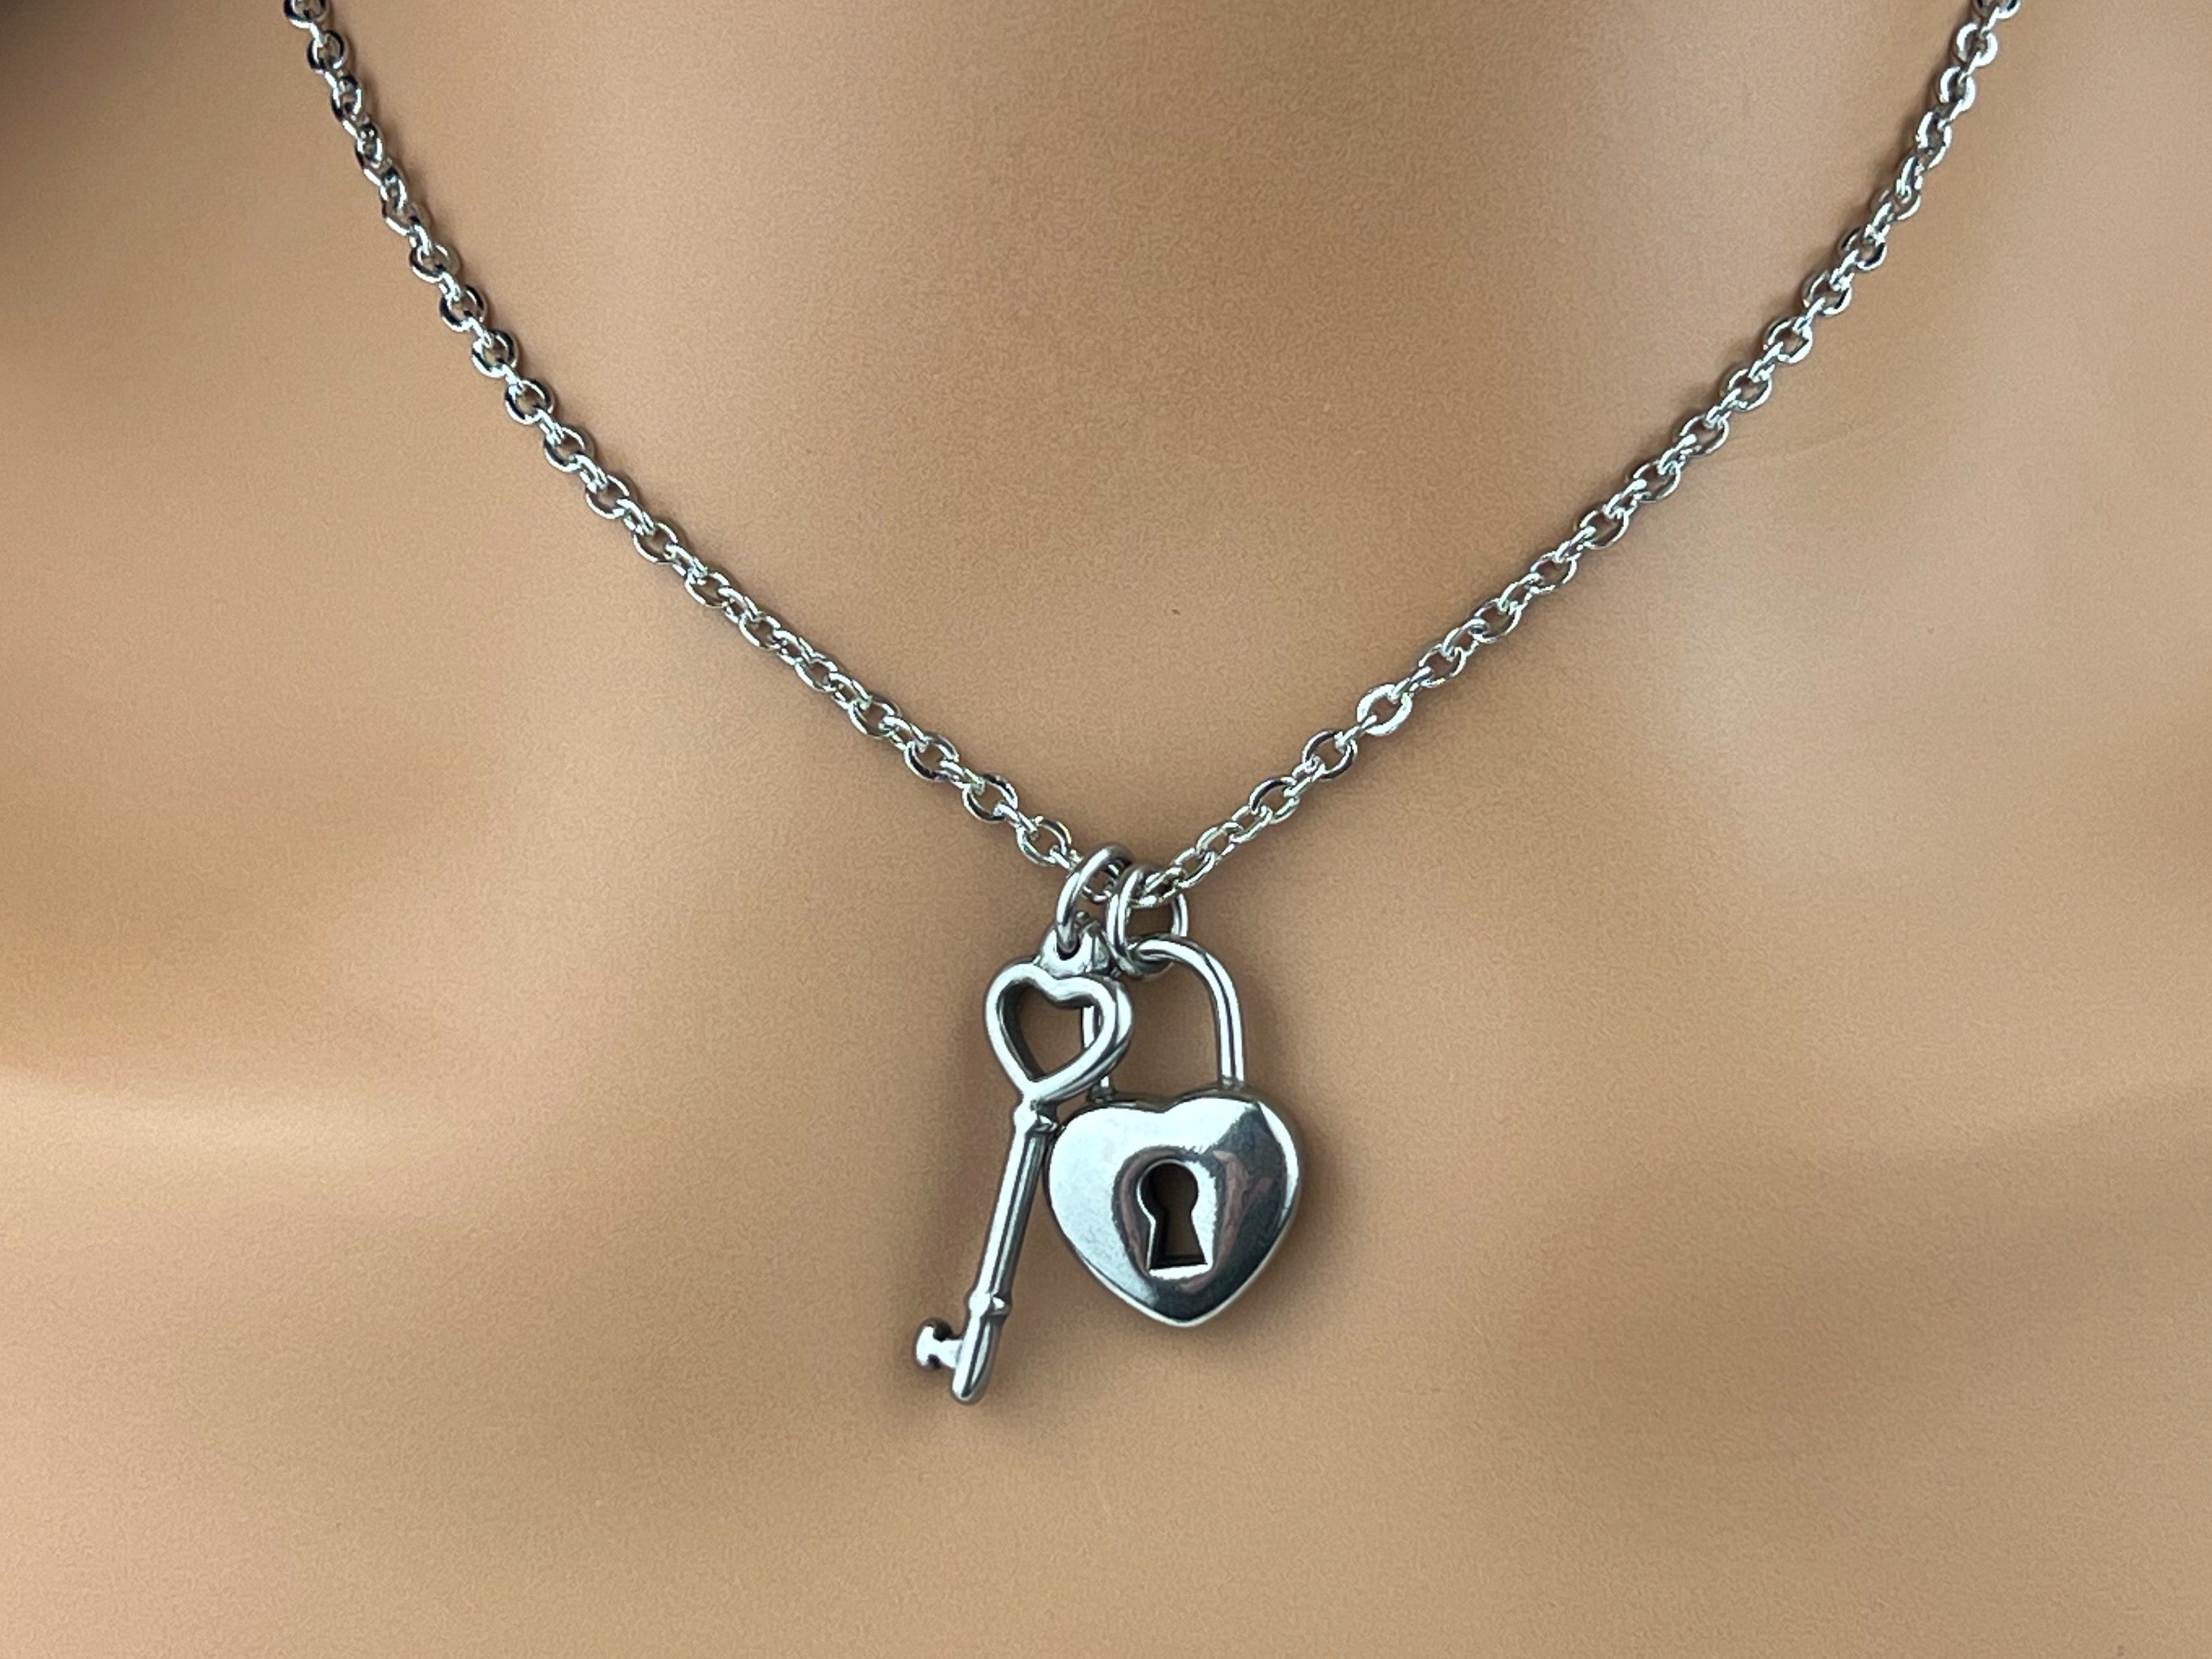 lock key necklace